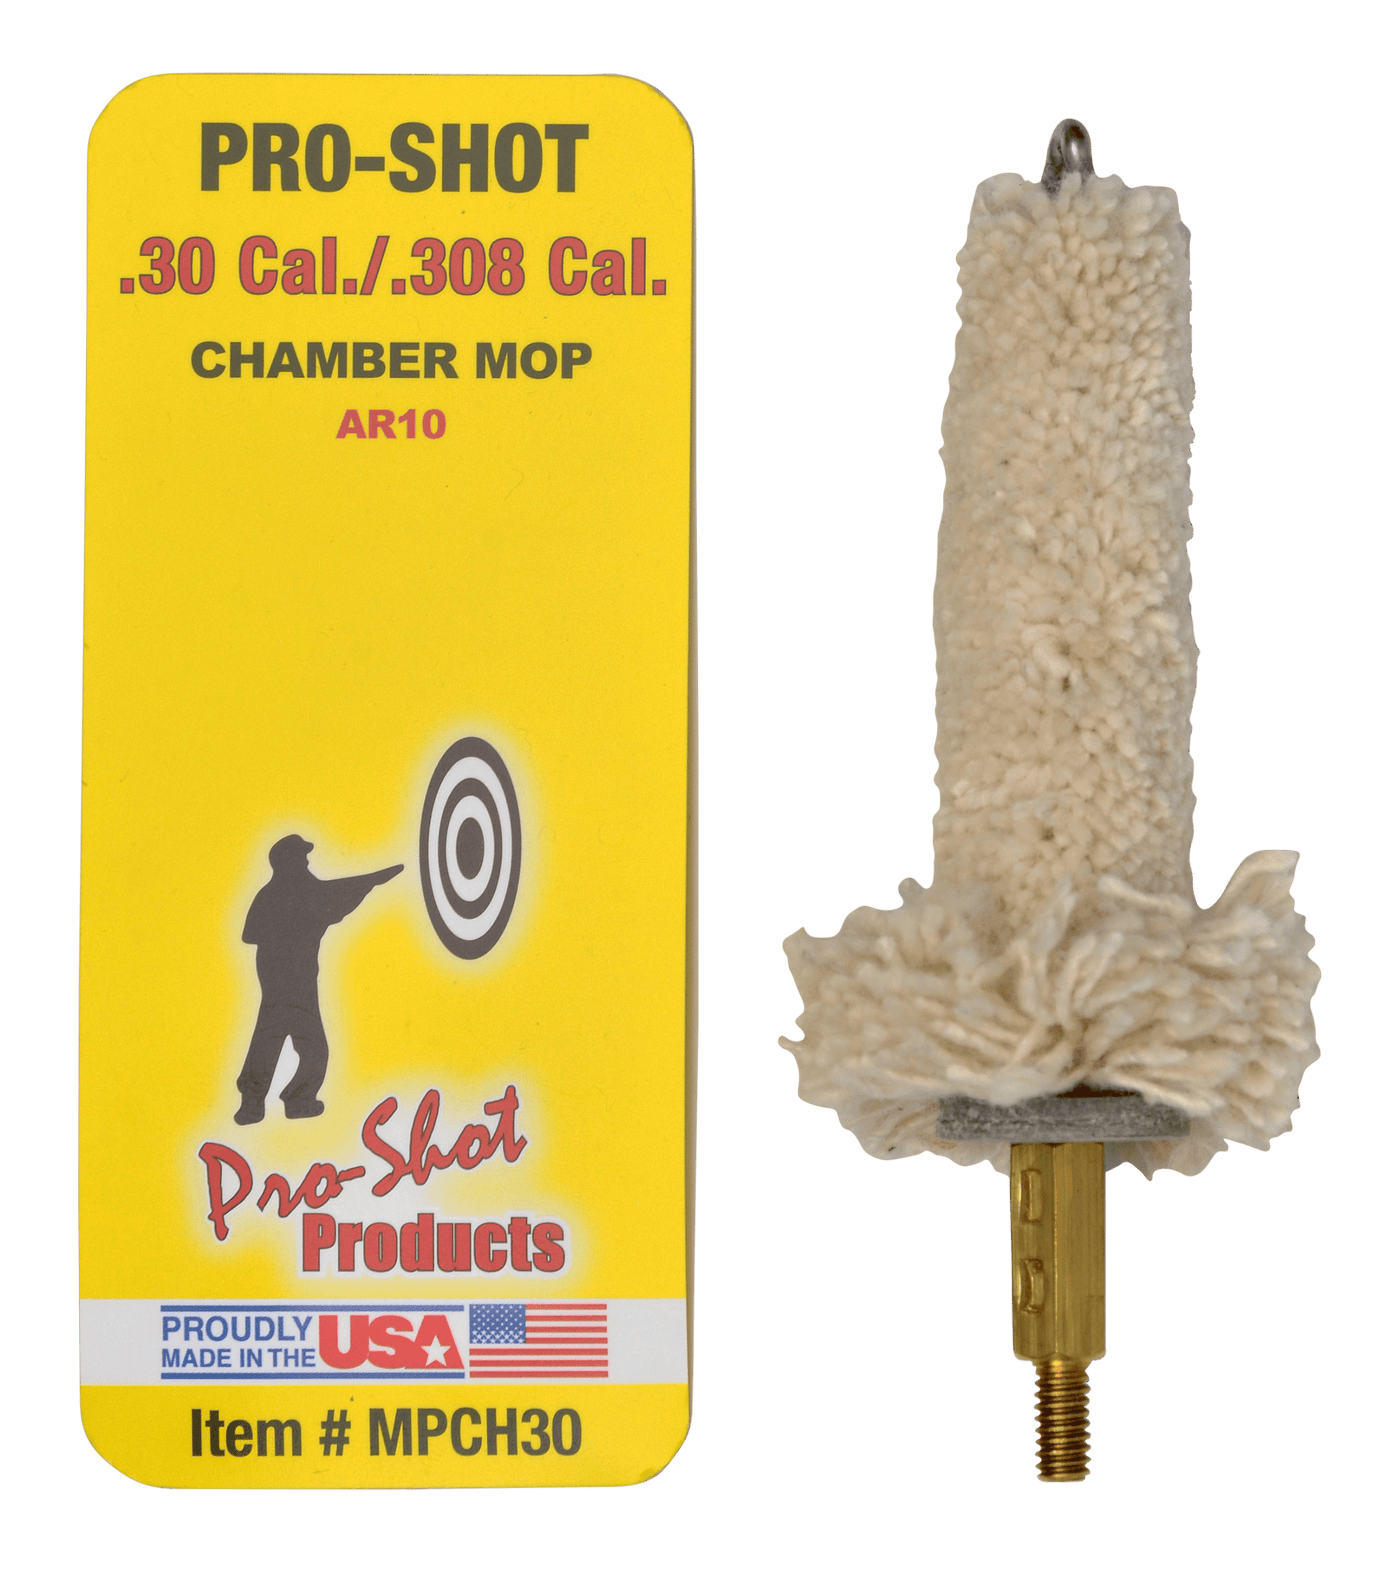 Pro-Shot Pro-shot Military Style, Proshot Mpch30           .308 Military Chamber Mop Gun Care